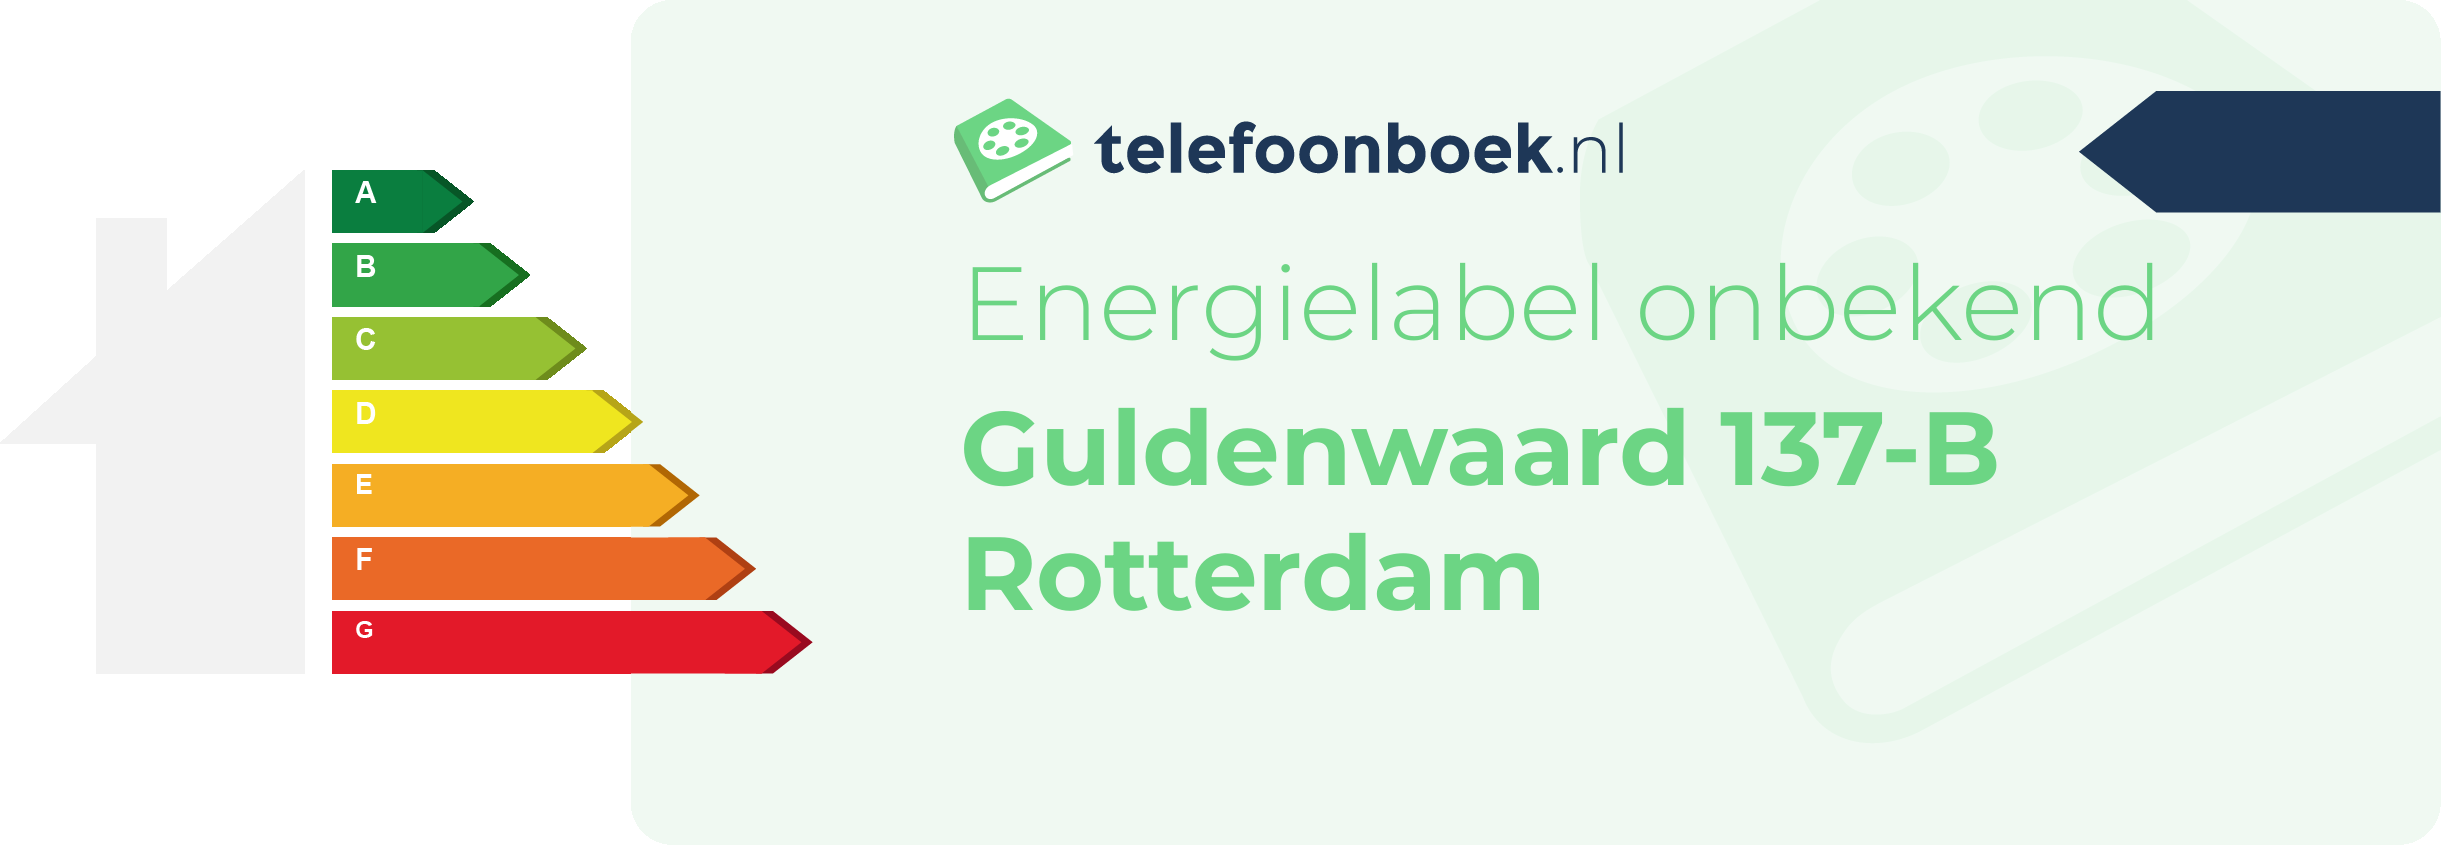 Energielabel Guldenwaard 137-B Rotterdam